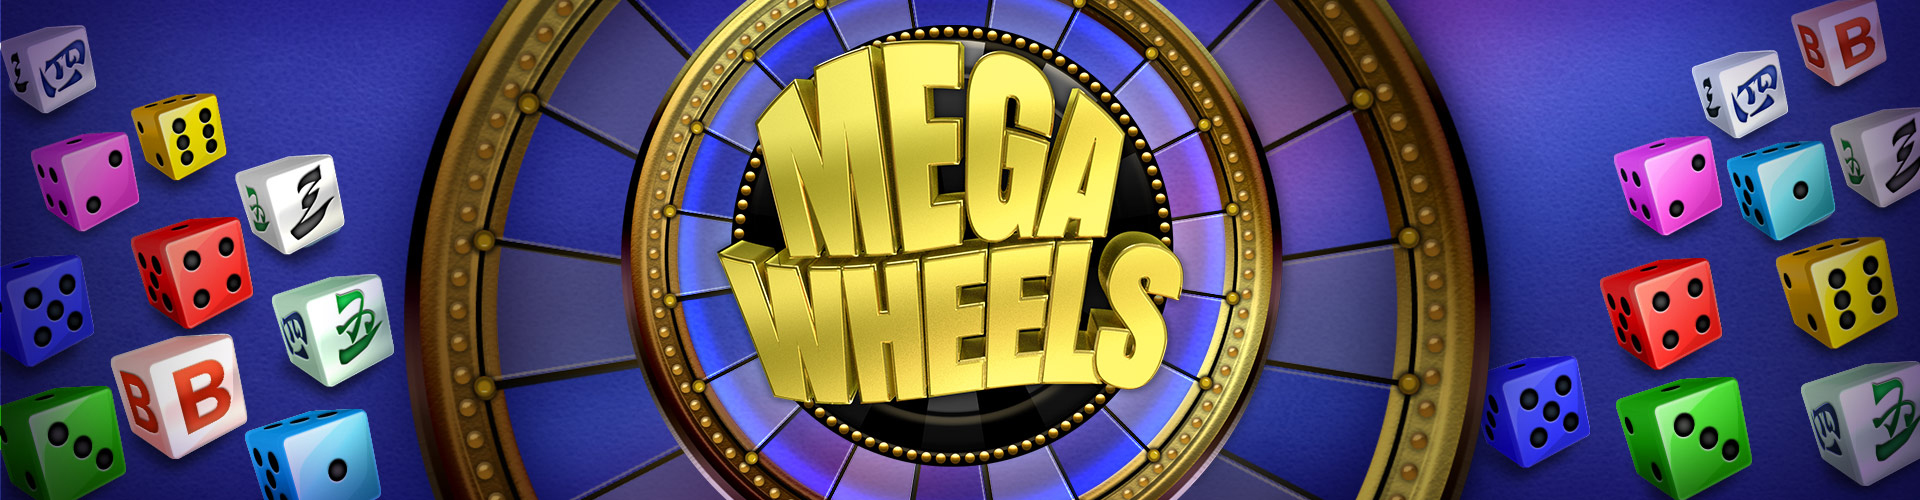 Mega Wheels - betFIRST Casino